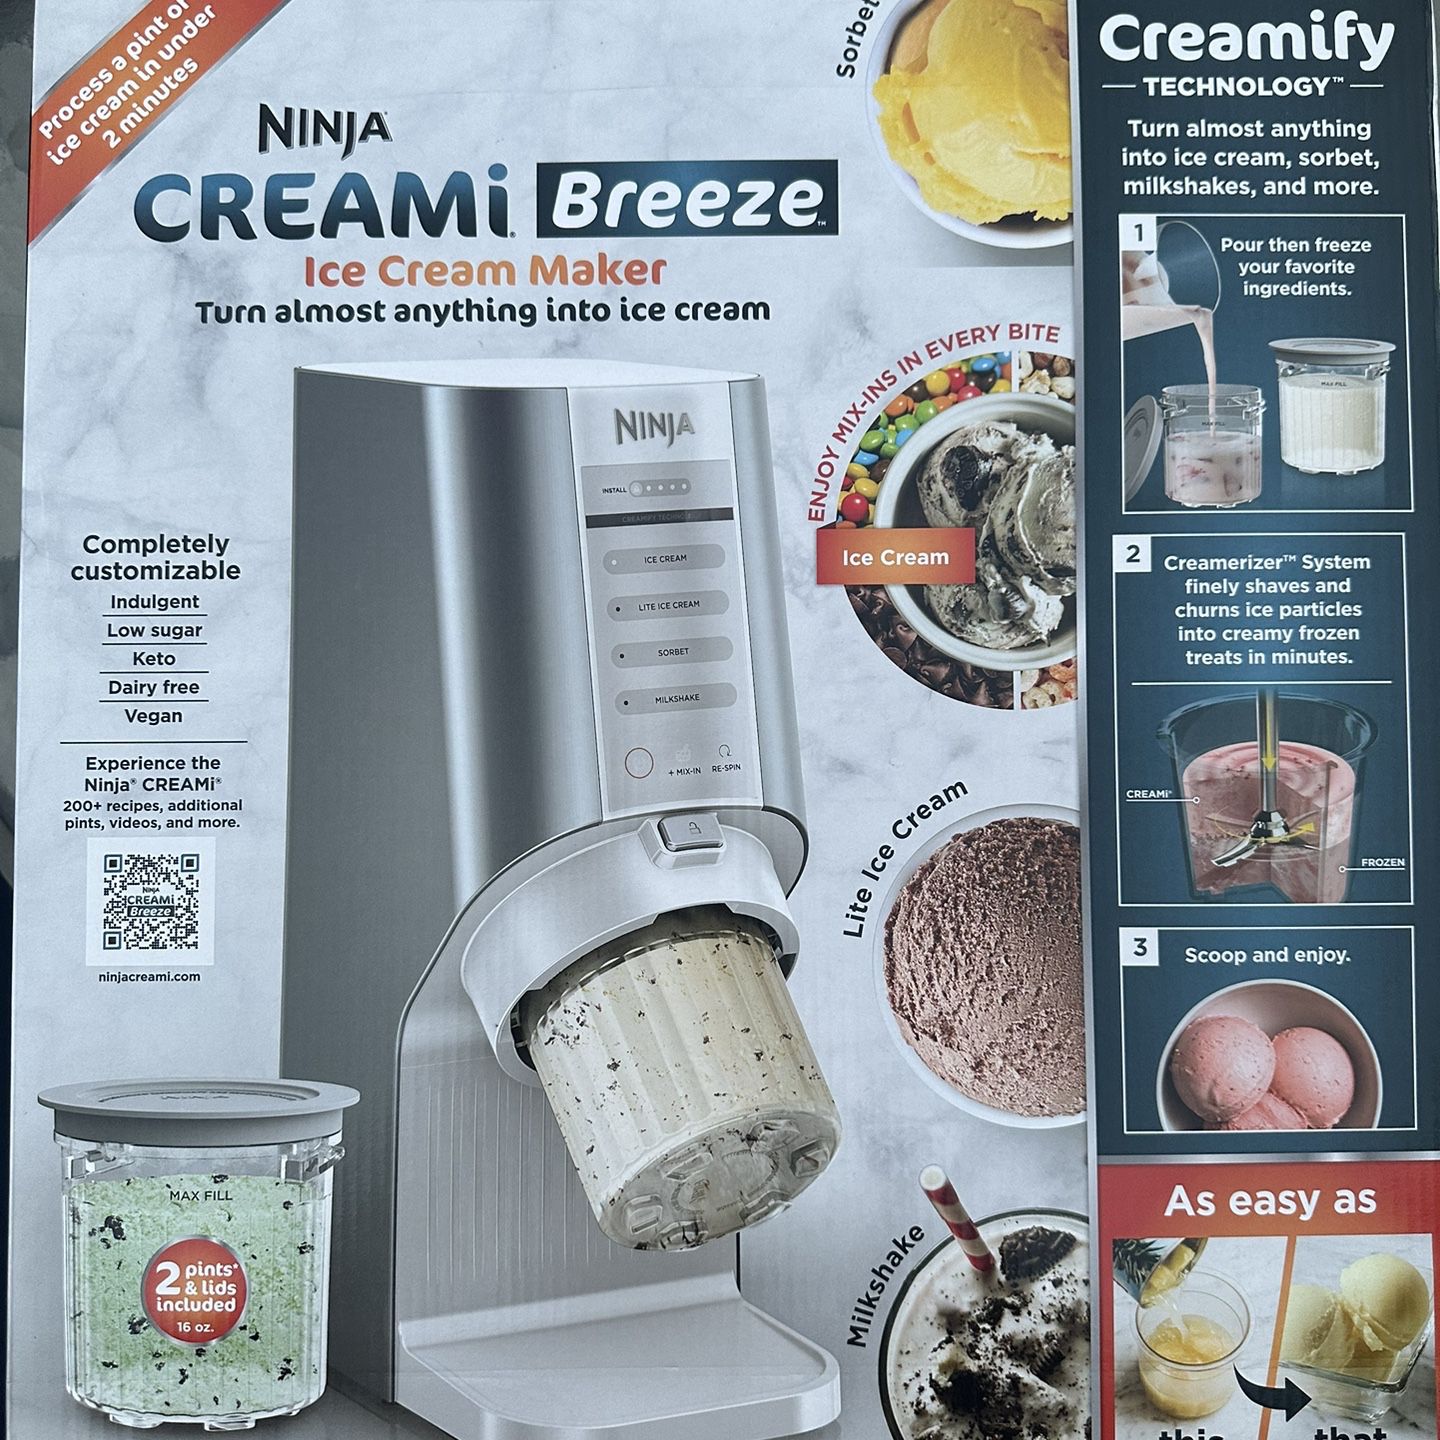 Ninja CREAMi Breeze 7 One Touch Programs, 4 Pints, Ice Cream